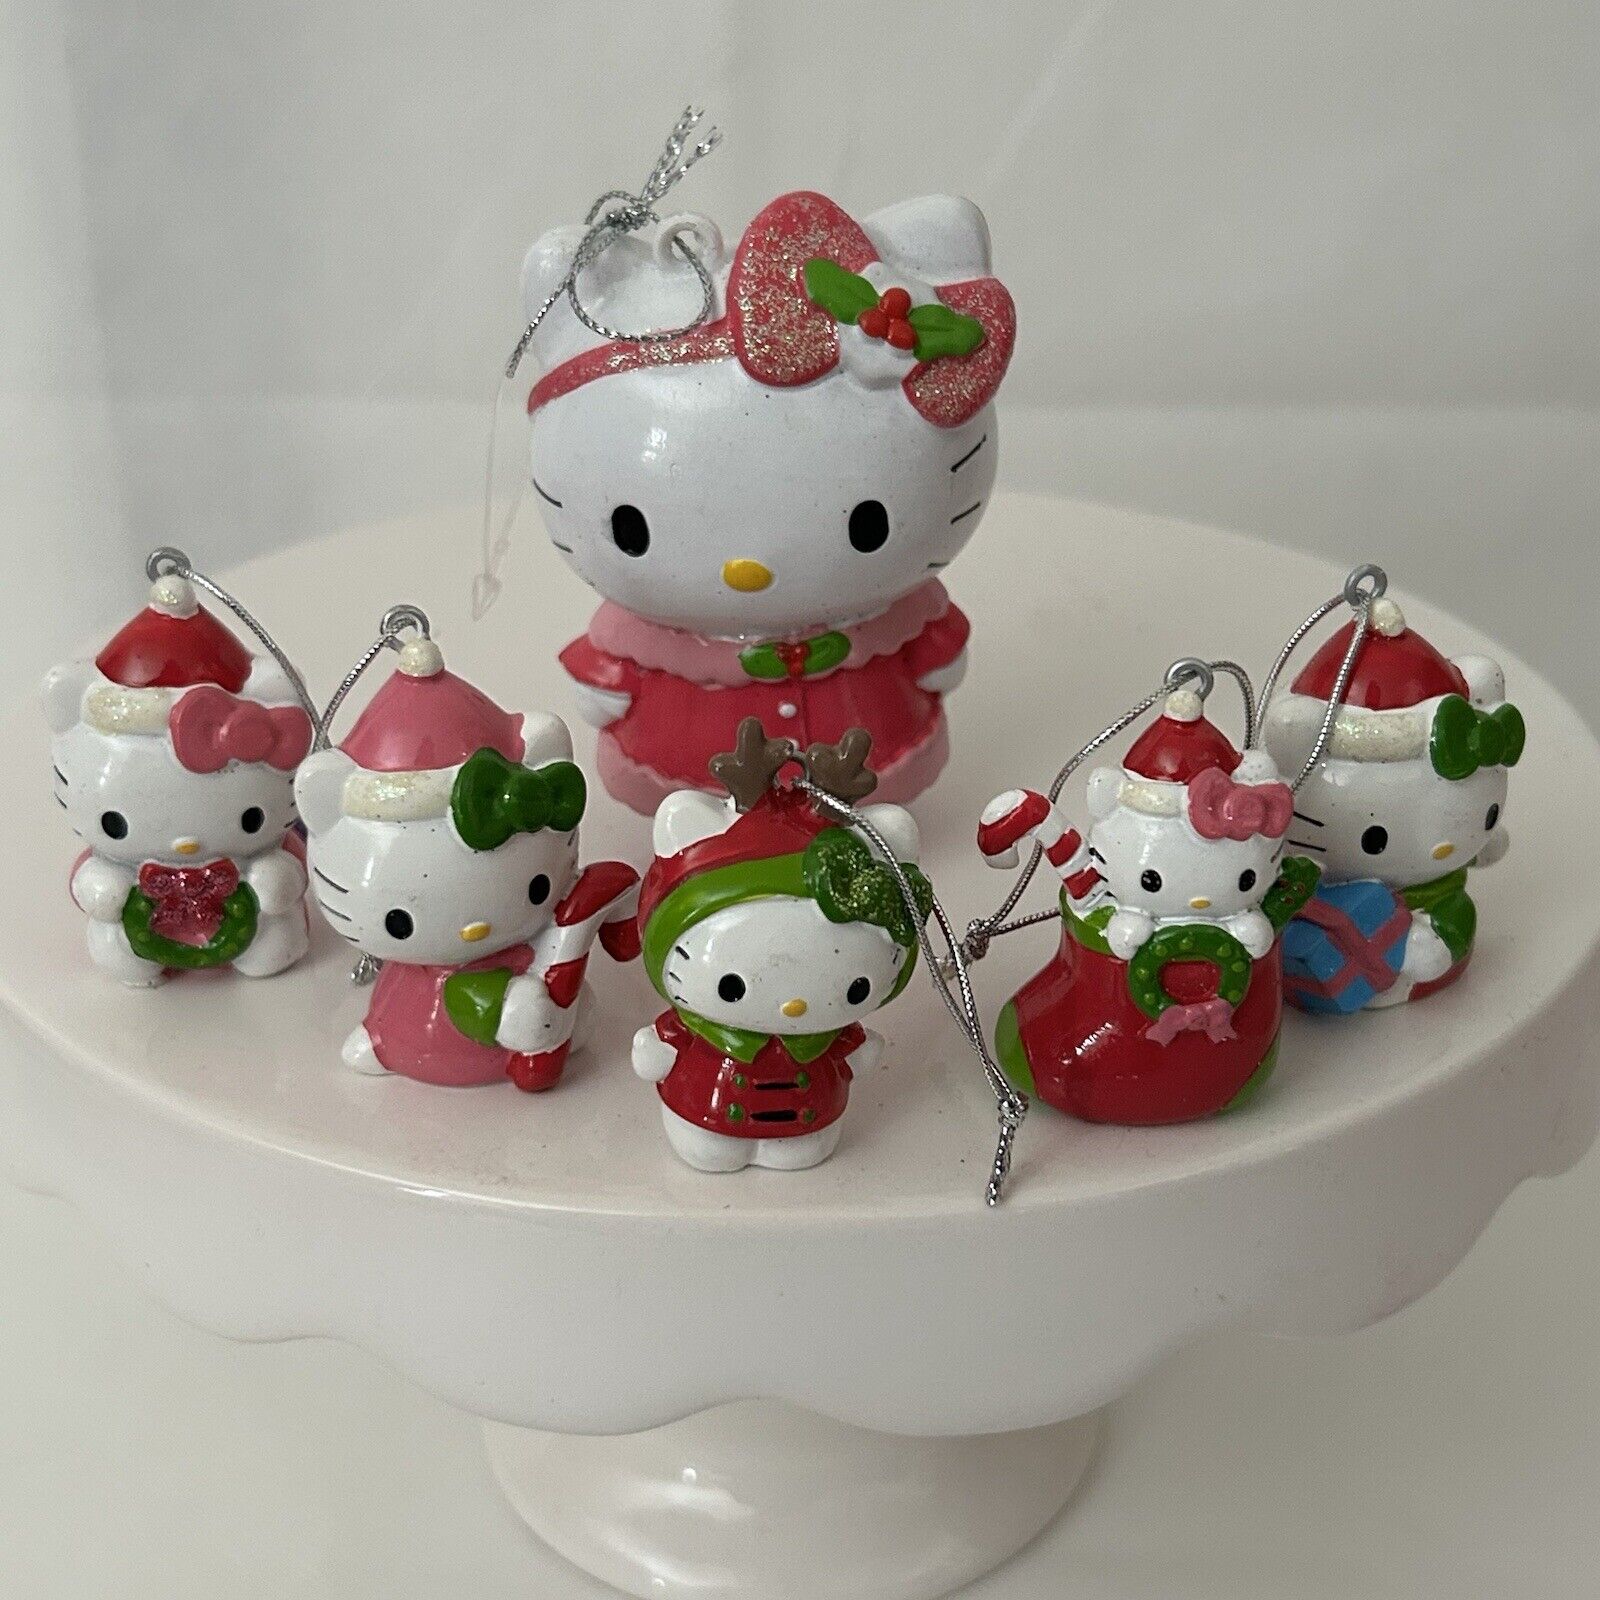 Lot of 6 Miniature Hello Kitty Holiday Christmas Ornaments 2012